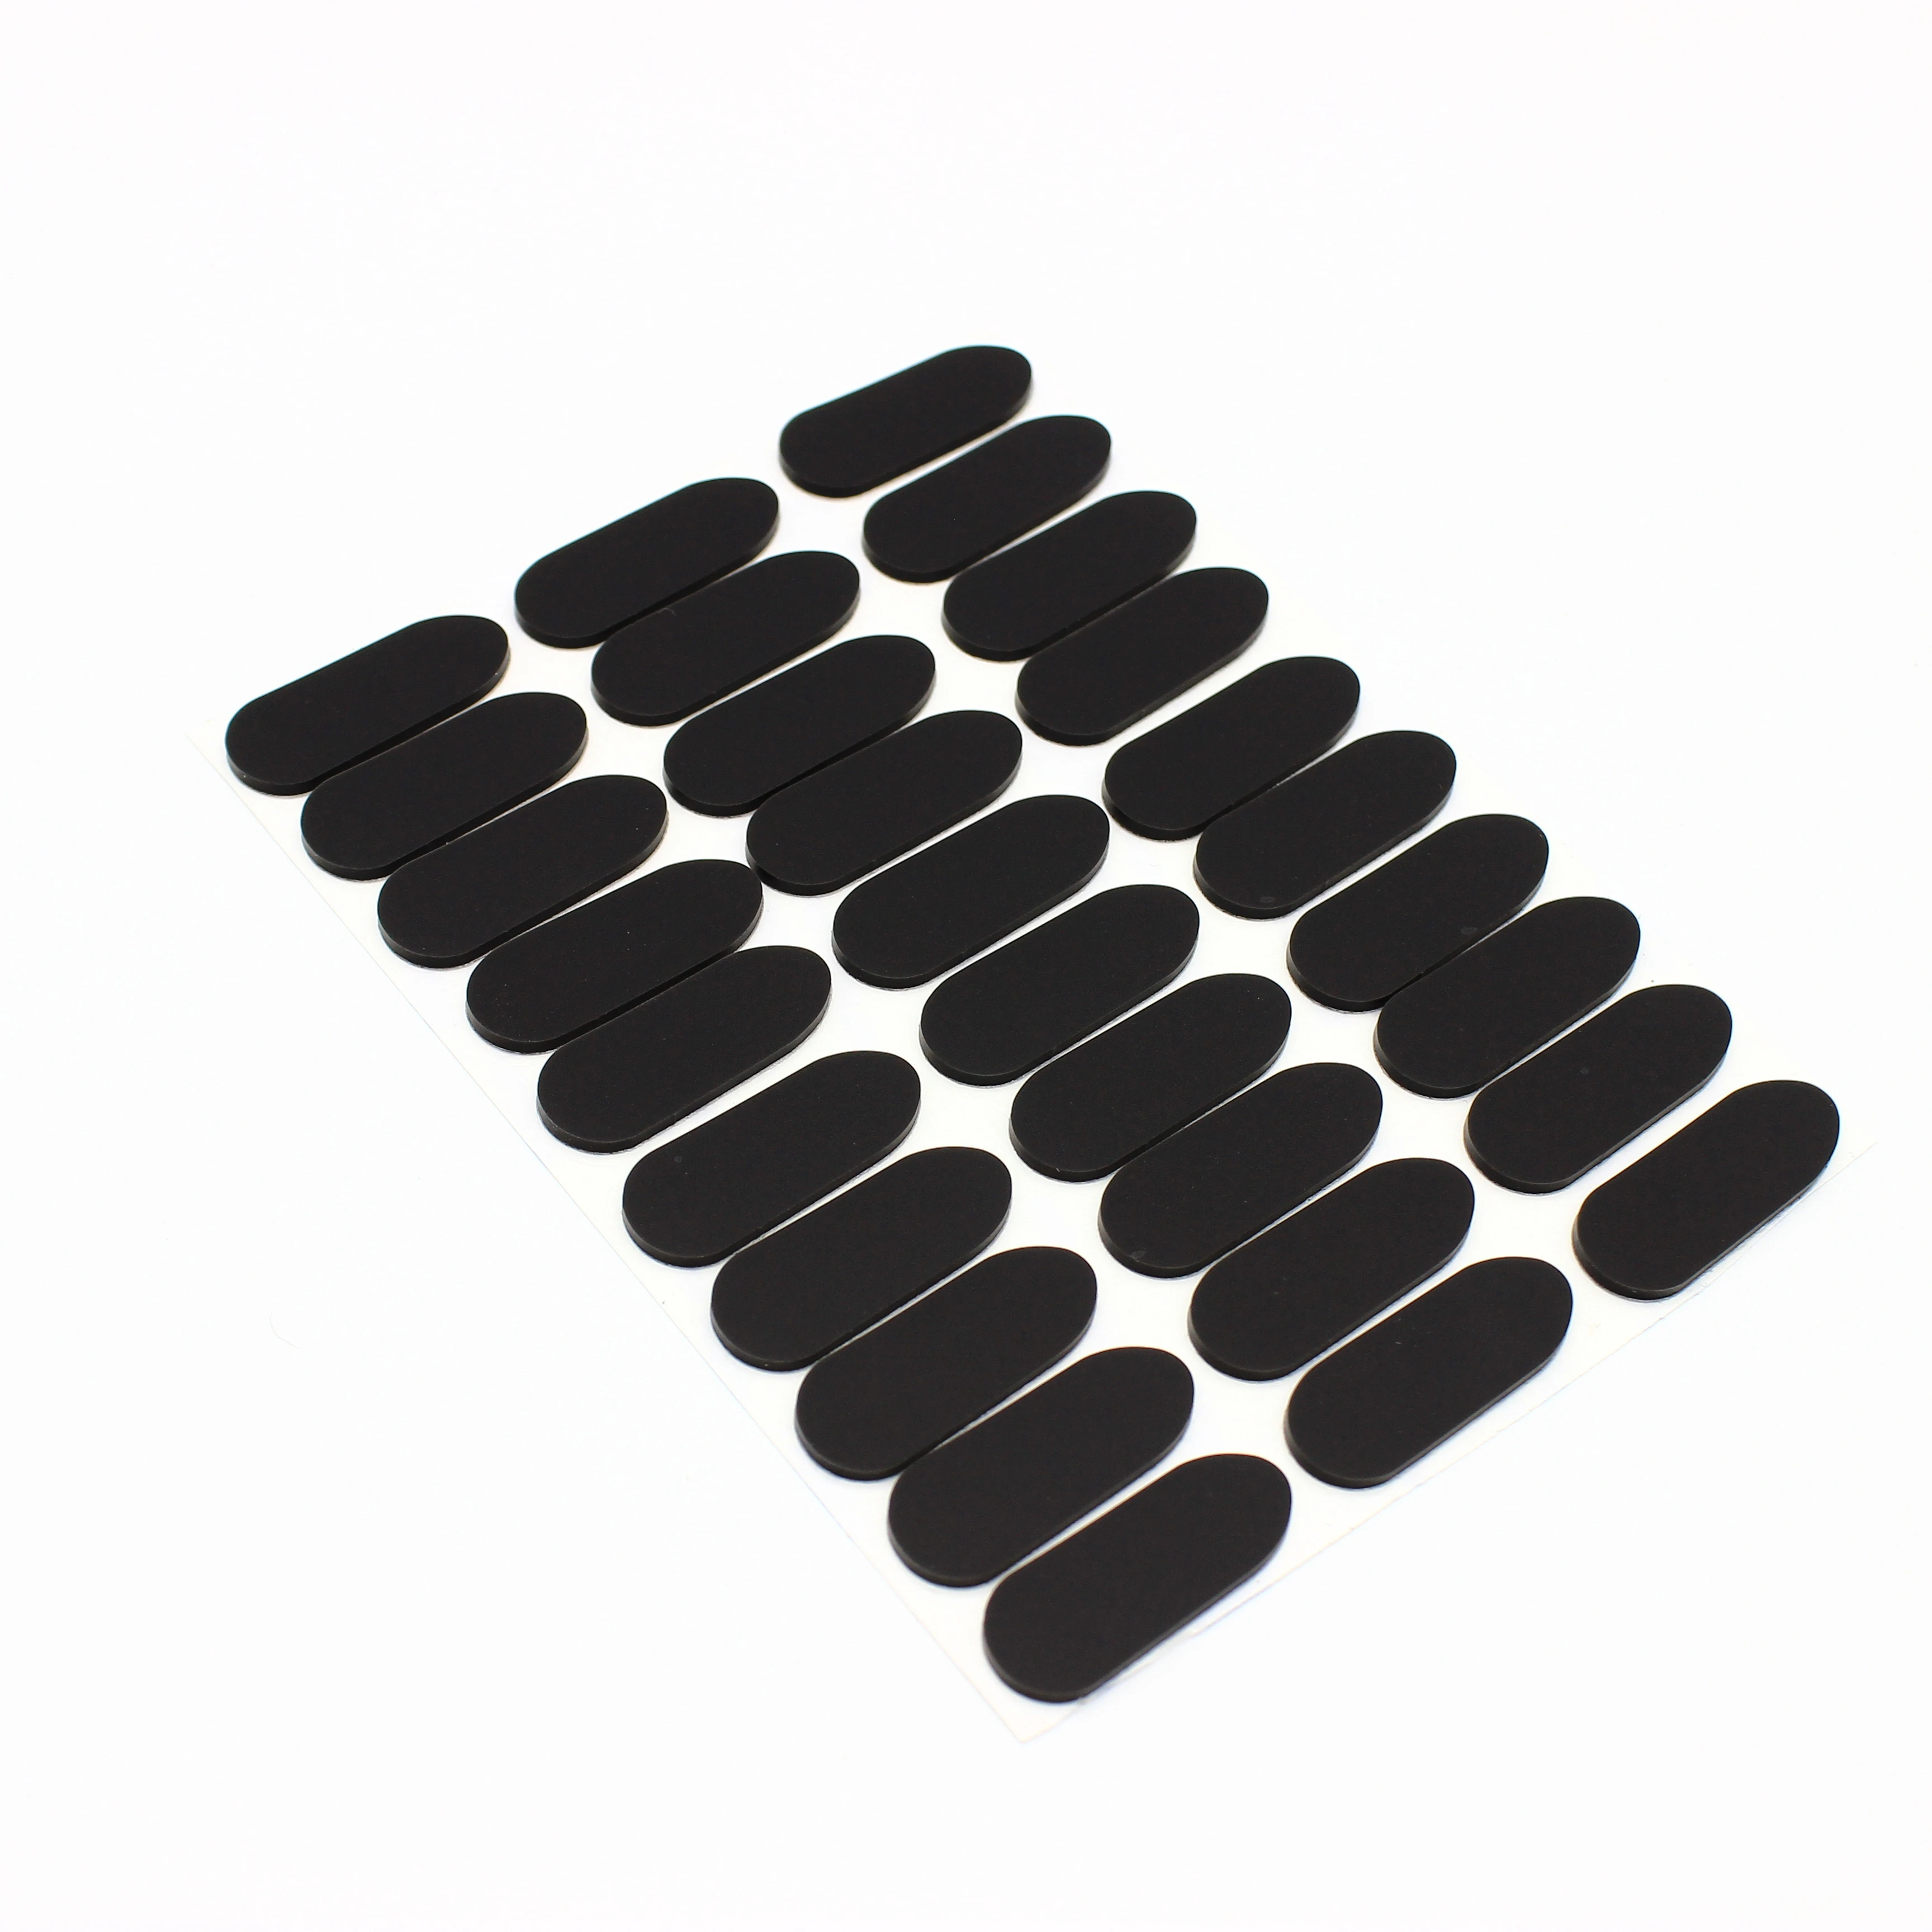 Customized anti-slip silicone rubber pad